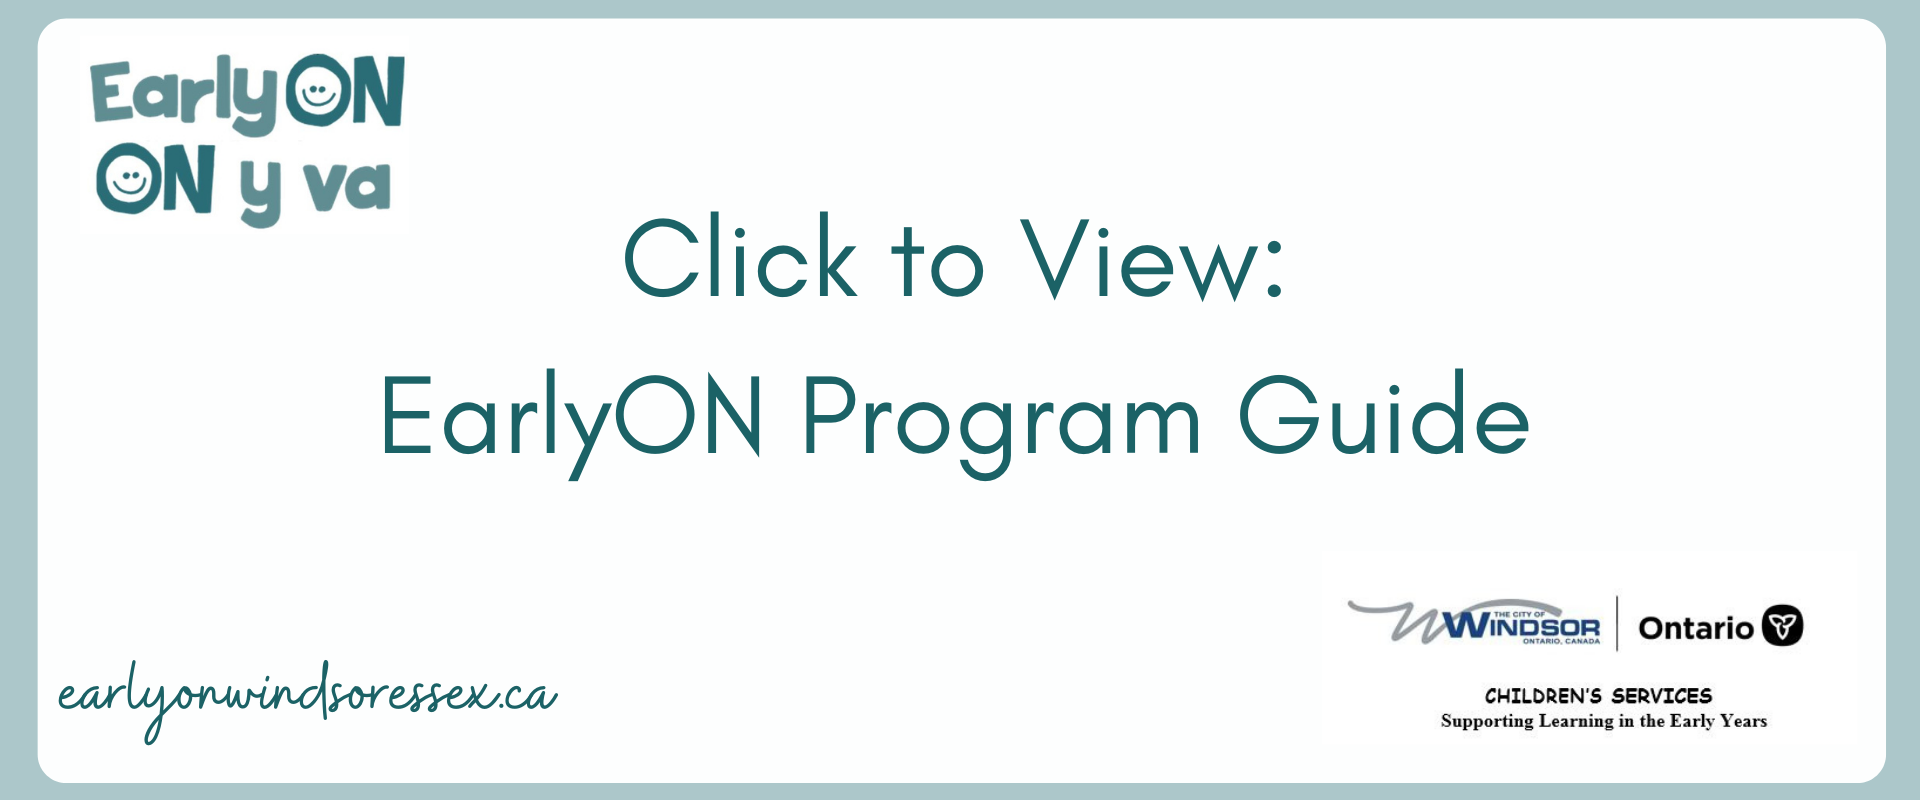 EarlyON Program Guide